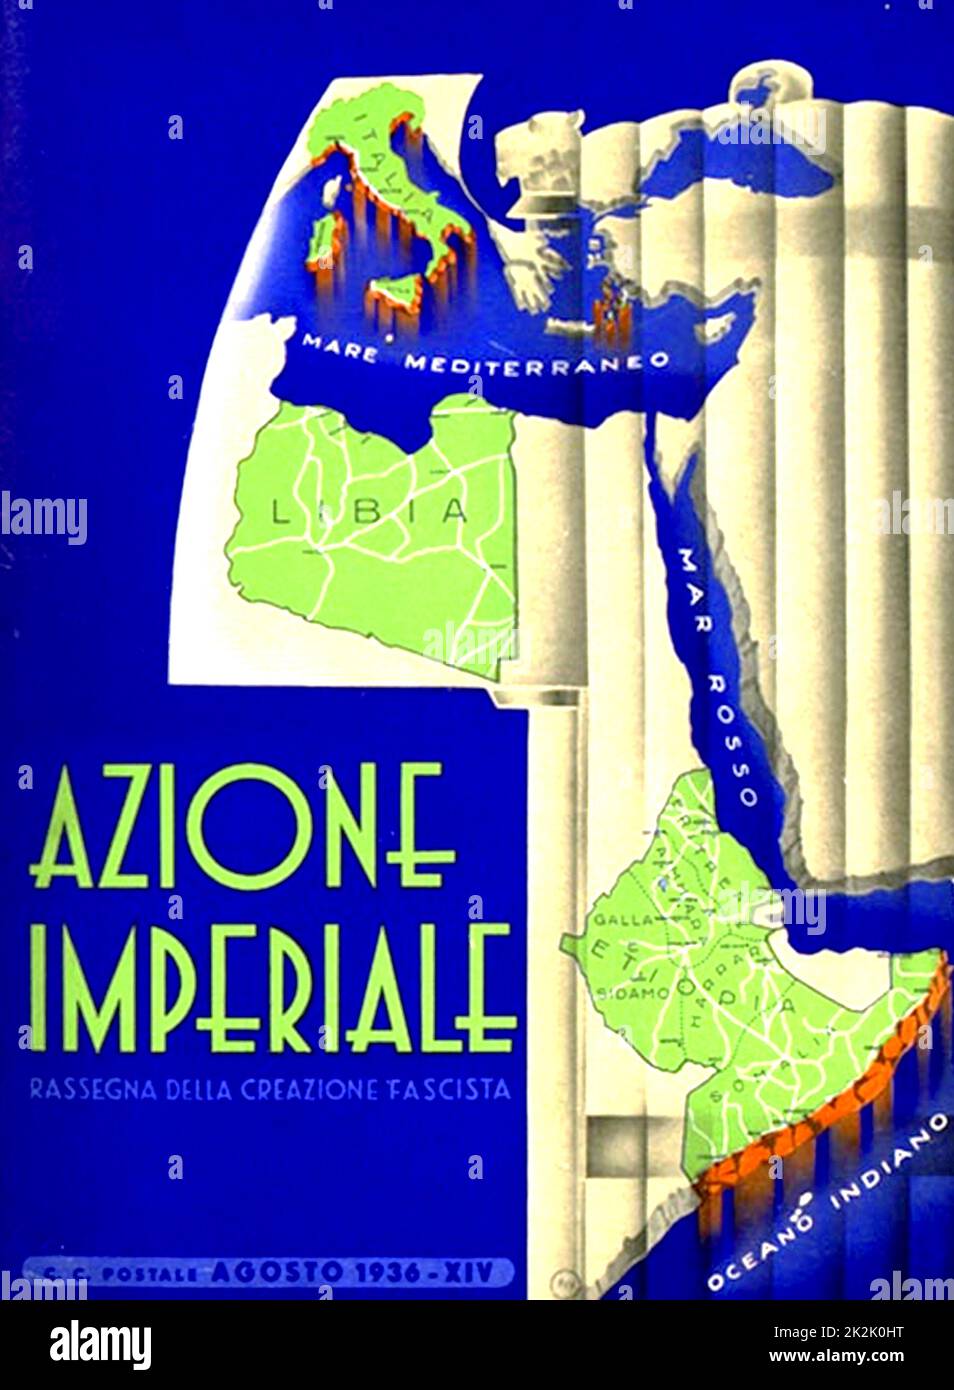 Italian Fascist Party Magazine. 'Azione Imperiale'.  1936. Magazine advancing culture directed by the Futurist writer F. T. Marinetti. The cover shows Italy's Empire in Libya, Somalia and Ethiopia. Stock Photo